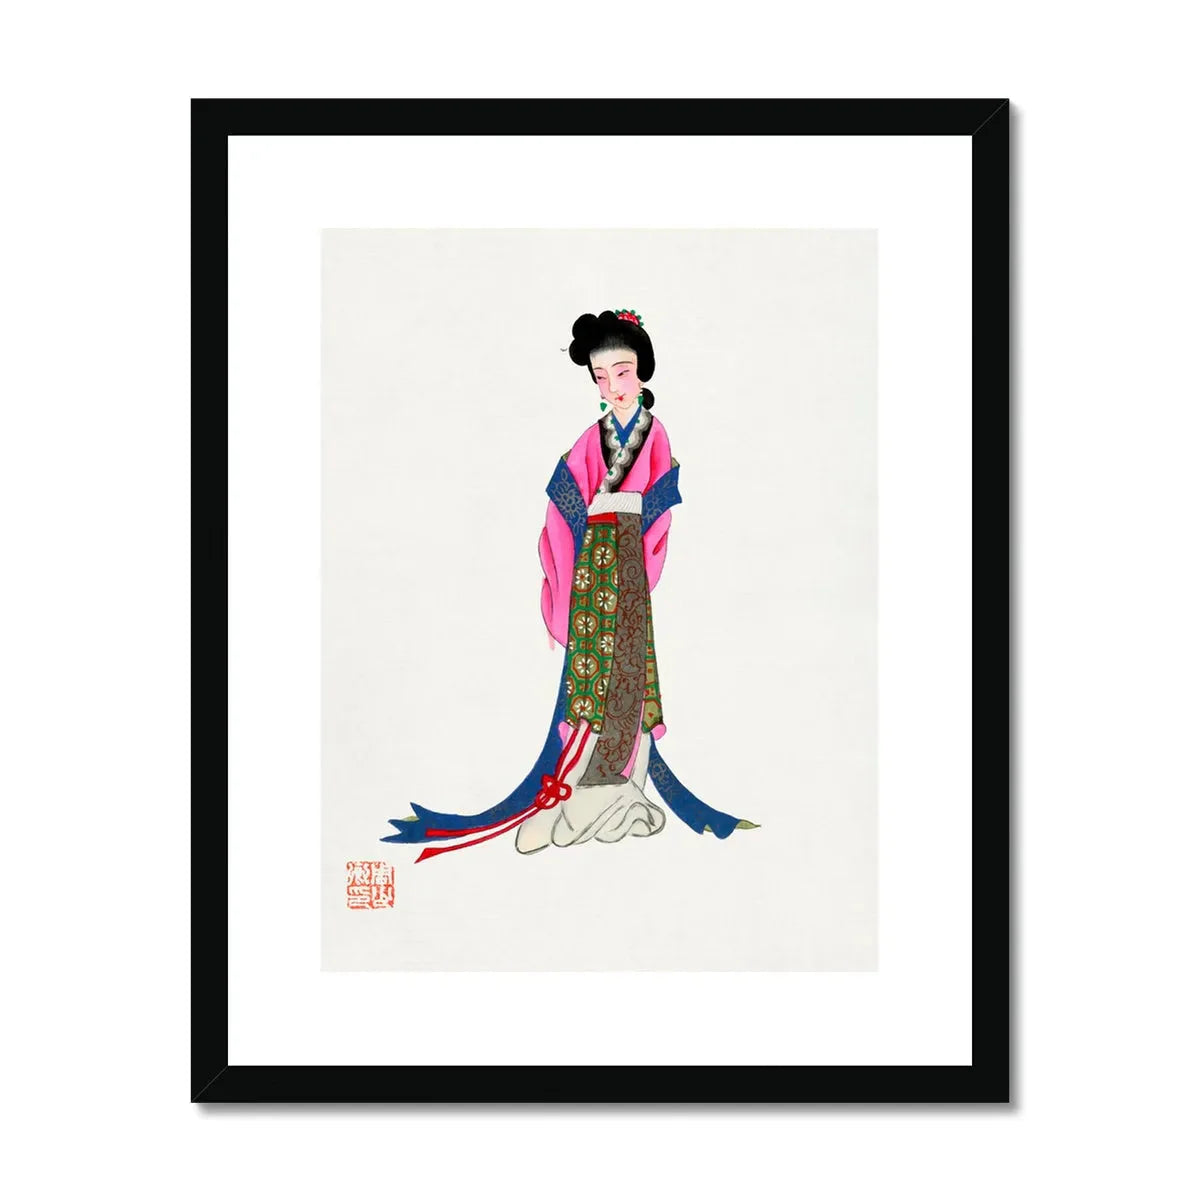 Chinese Noblewoman Framed & Mounted Print - 16’x20’ / Black Frame - Posters Prints & Visual Artwork - Aesthetic Art